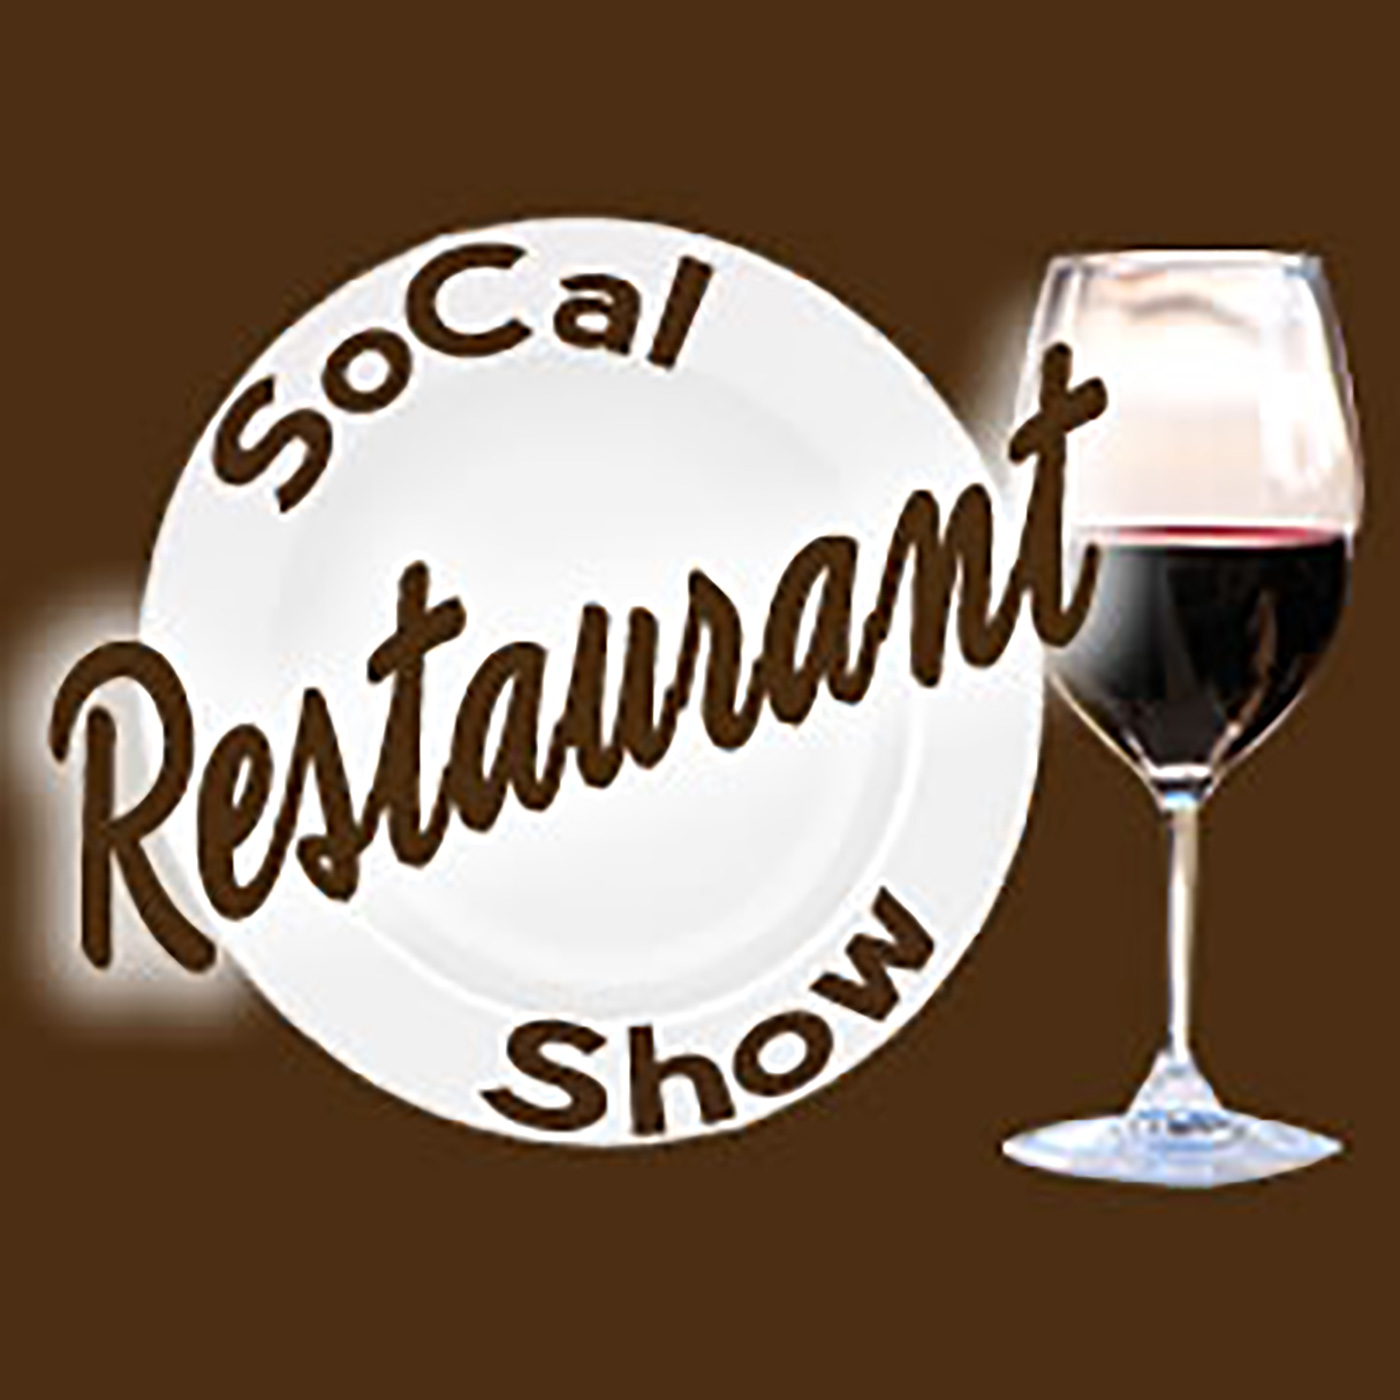 SoCal Restaurant Show